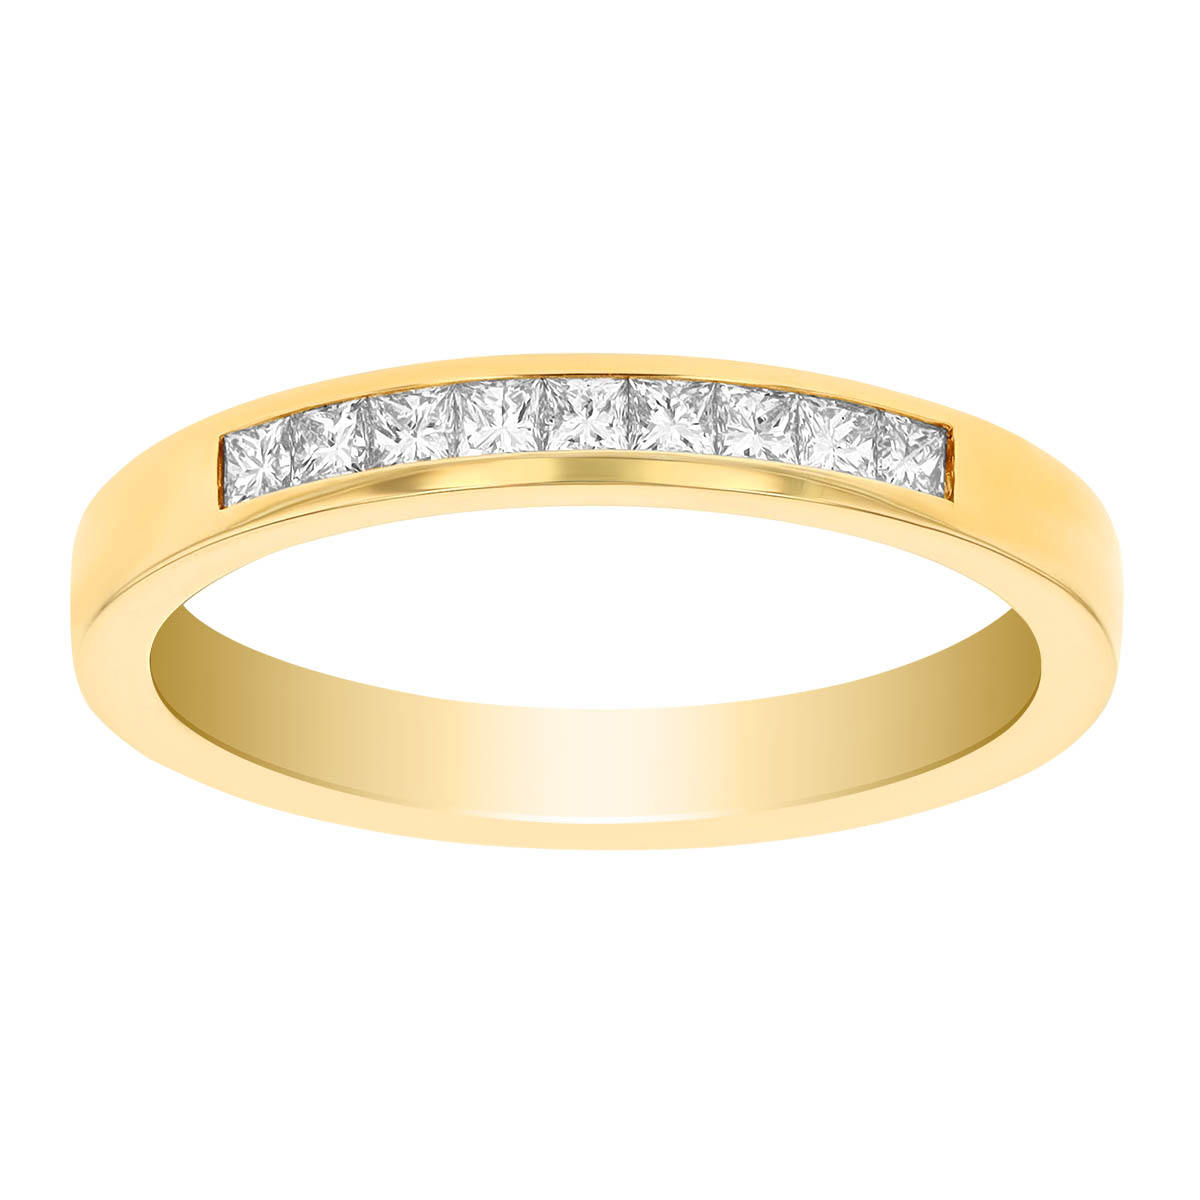 14K Yellow Gold Channel Set Princess Cut Diamond Wedding